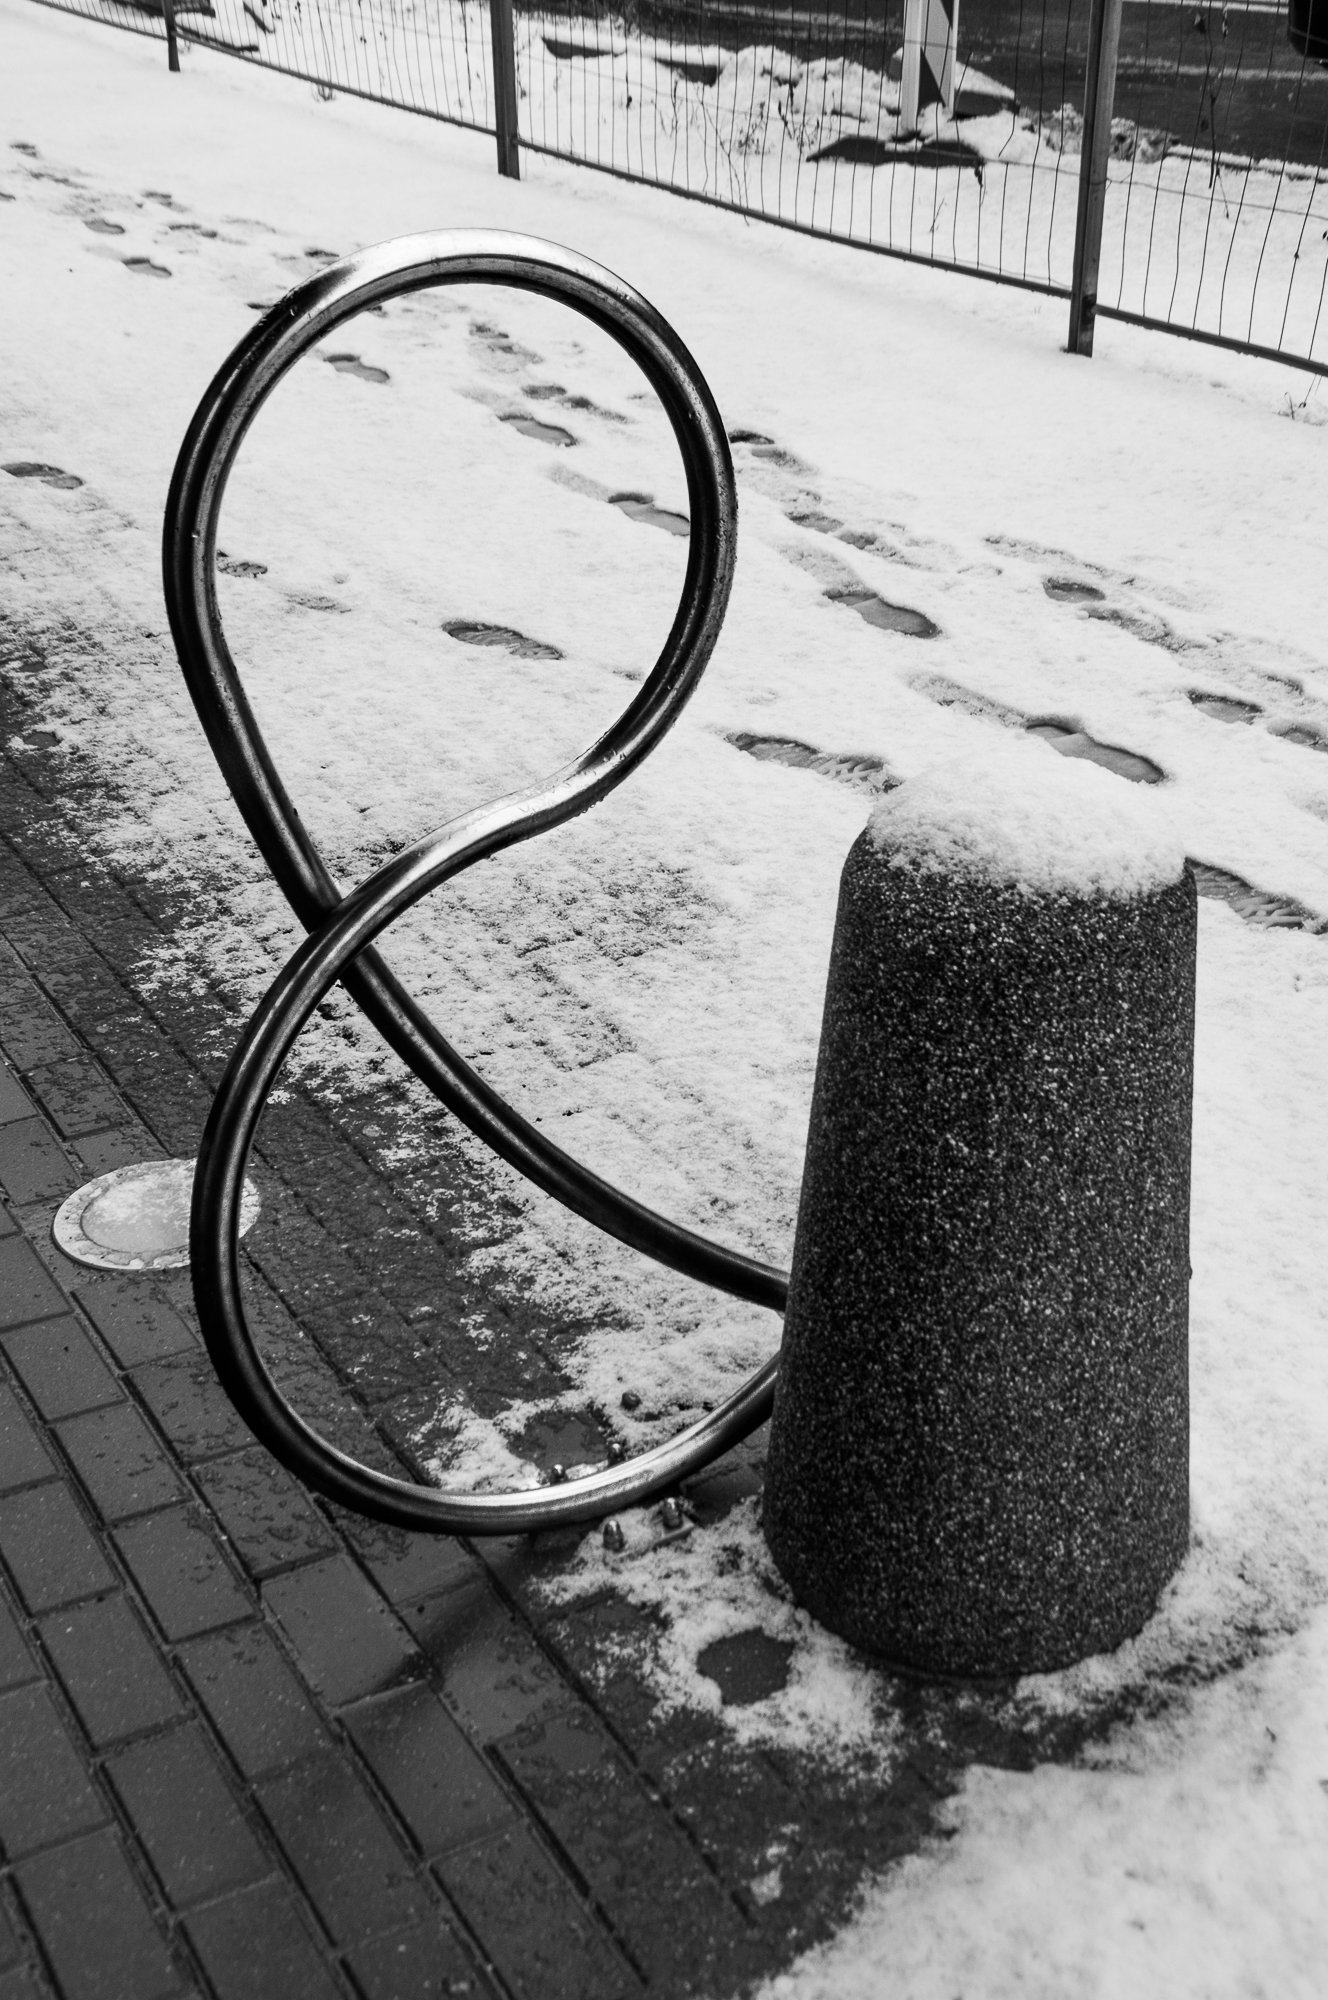 Adam Mazek Photography Warsaw (Warszawa) 2019. Post: "Be local, think global." Minimalism. Surrealism. Inspired by Dali.